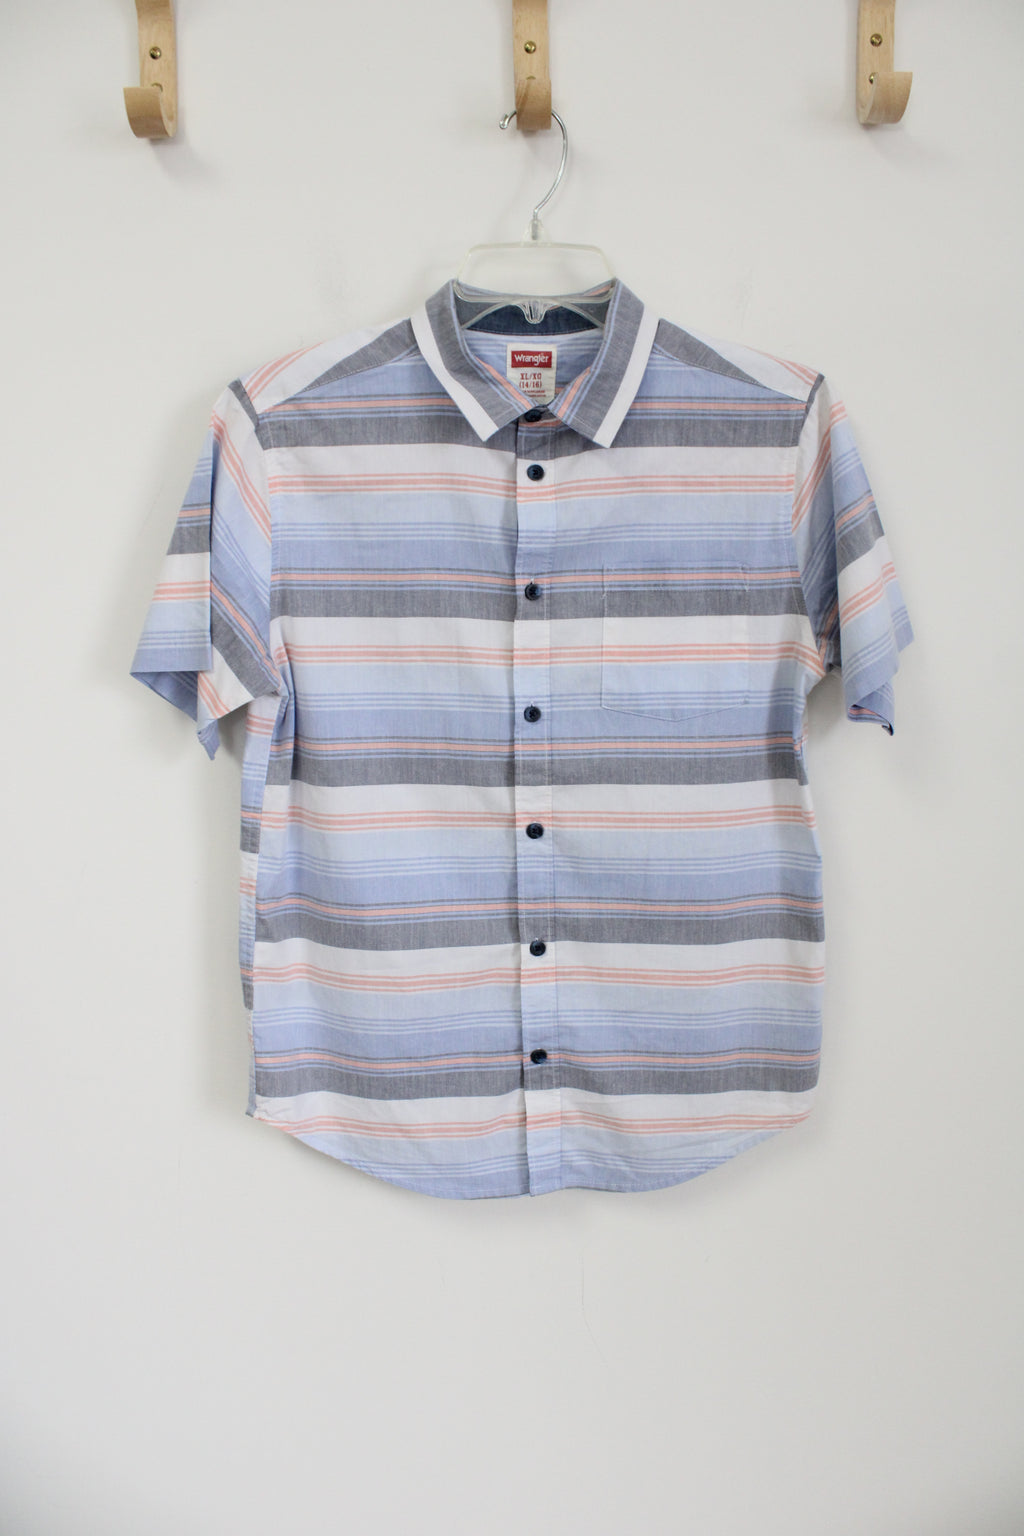 Wrangler Striped Button Down Shirt | Youth XL (14/16)